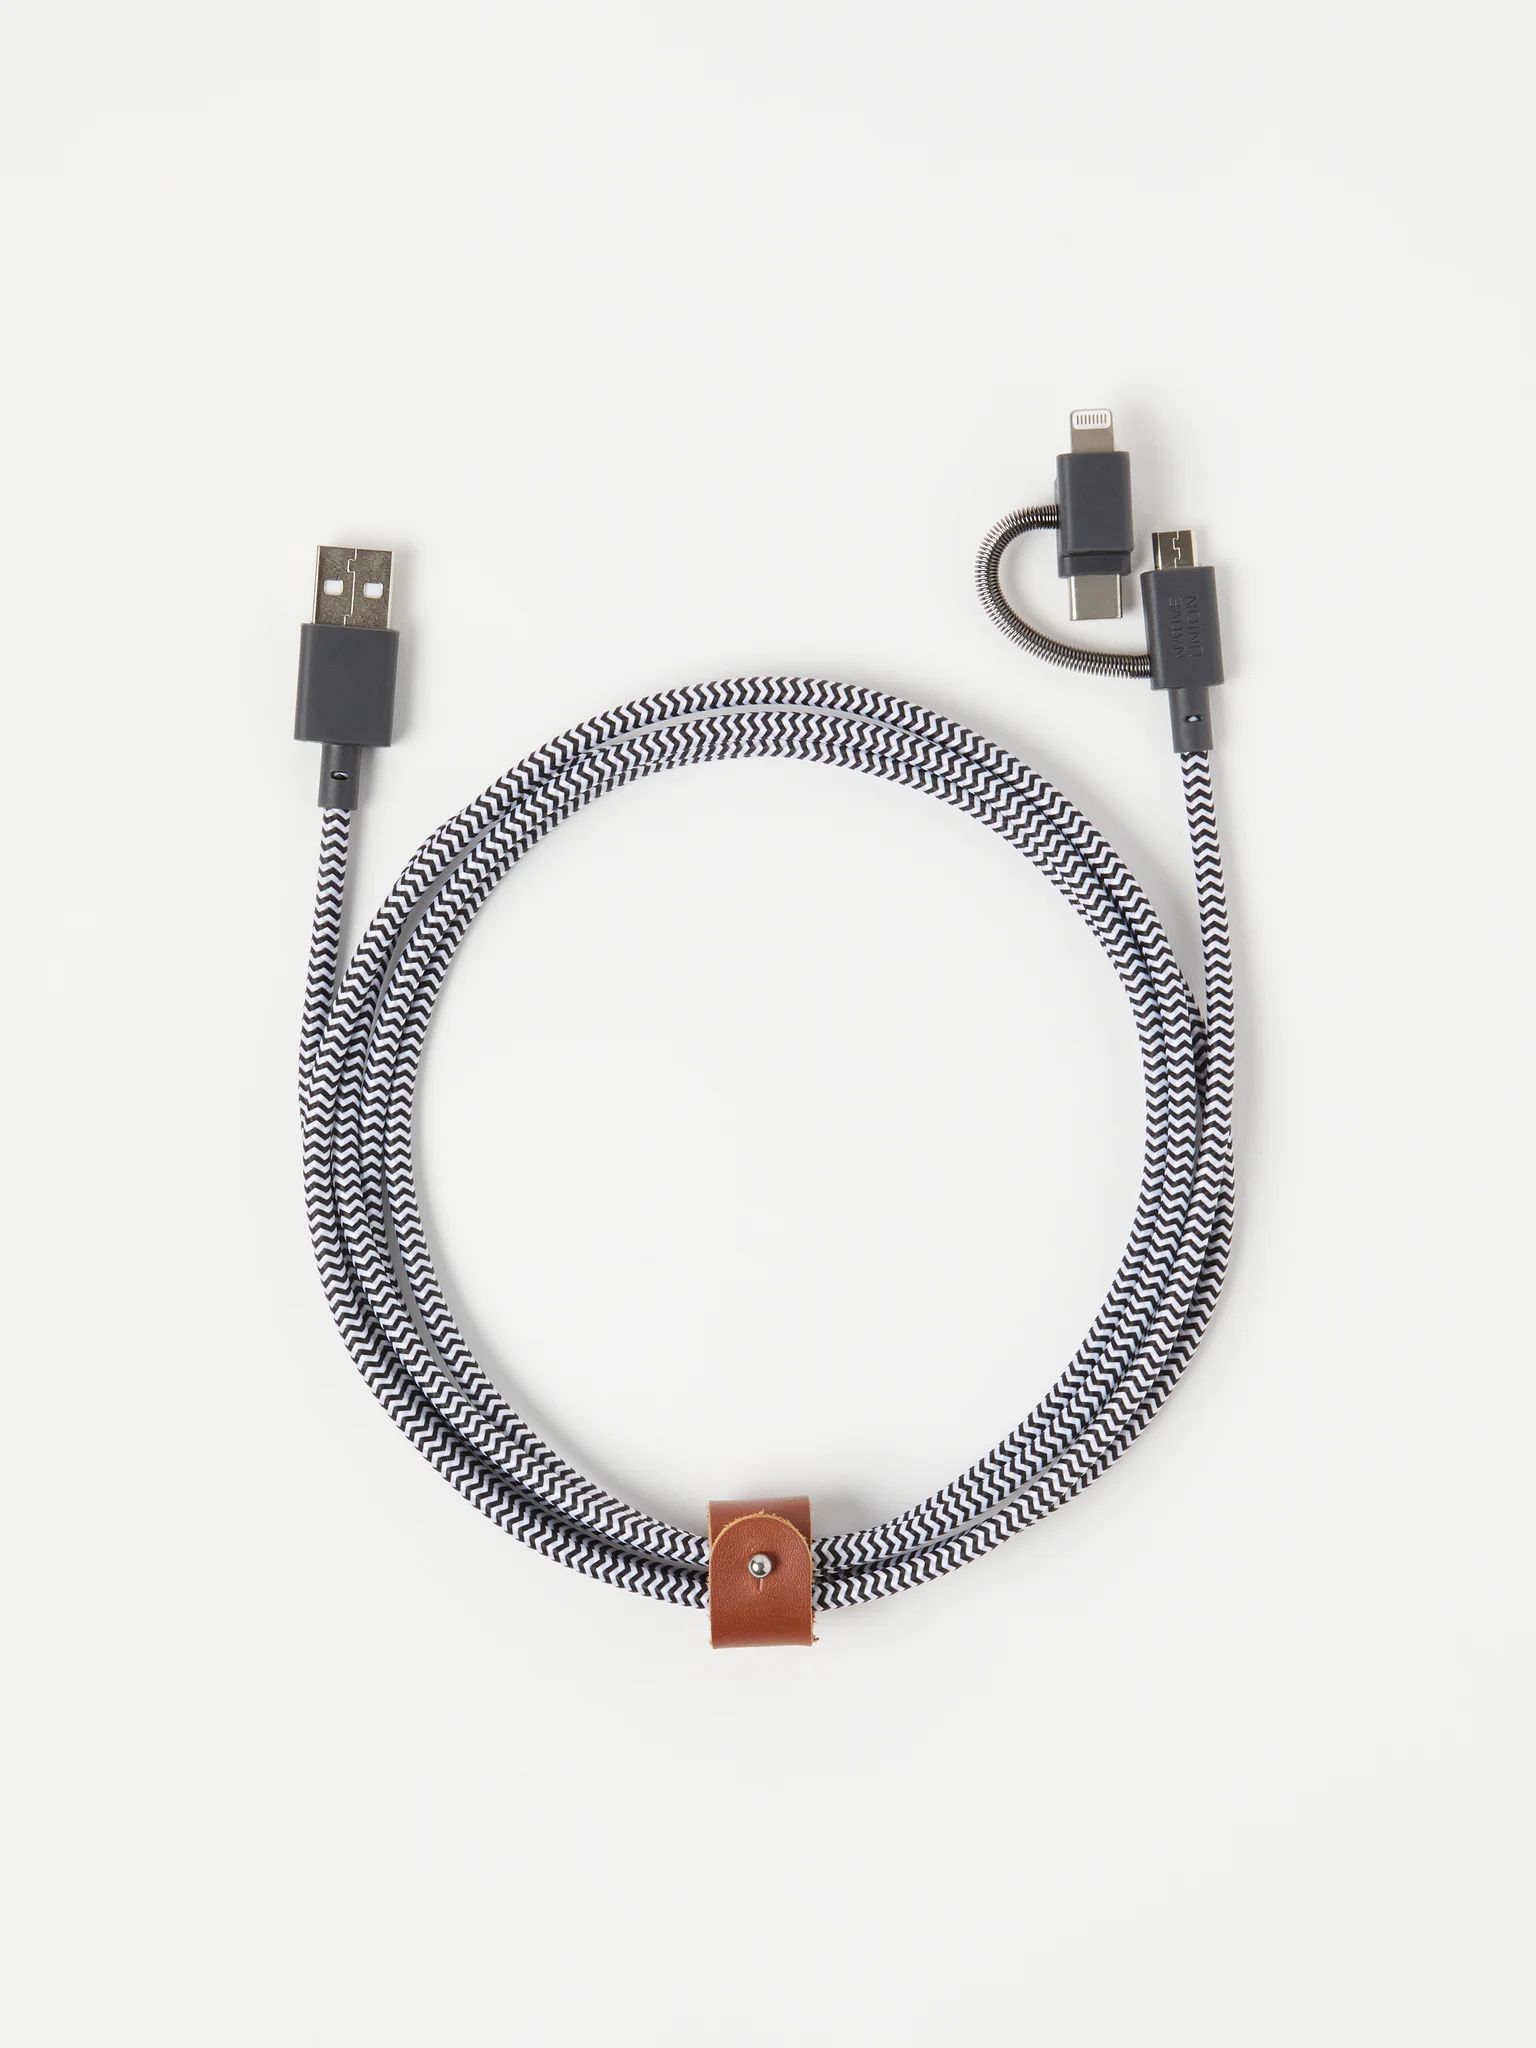 Universal Belt Cable | Verishop